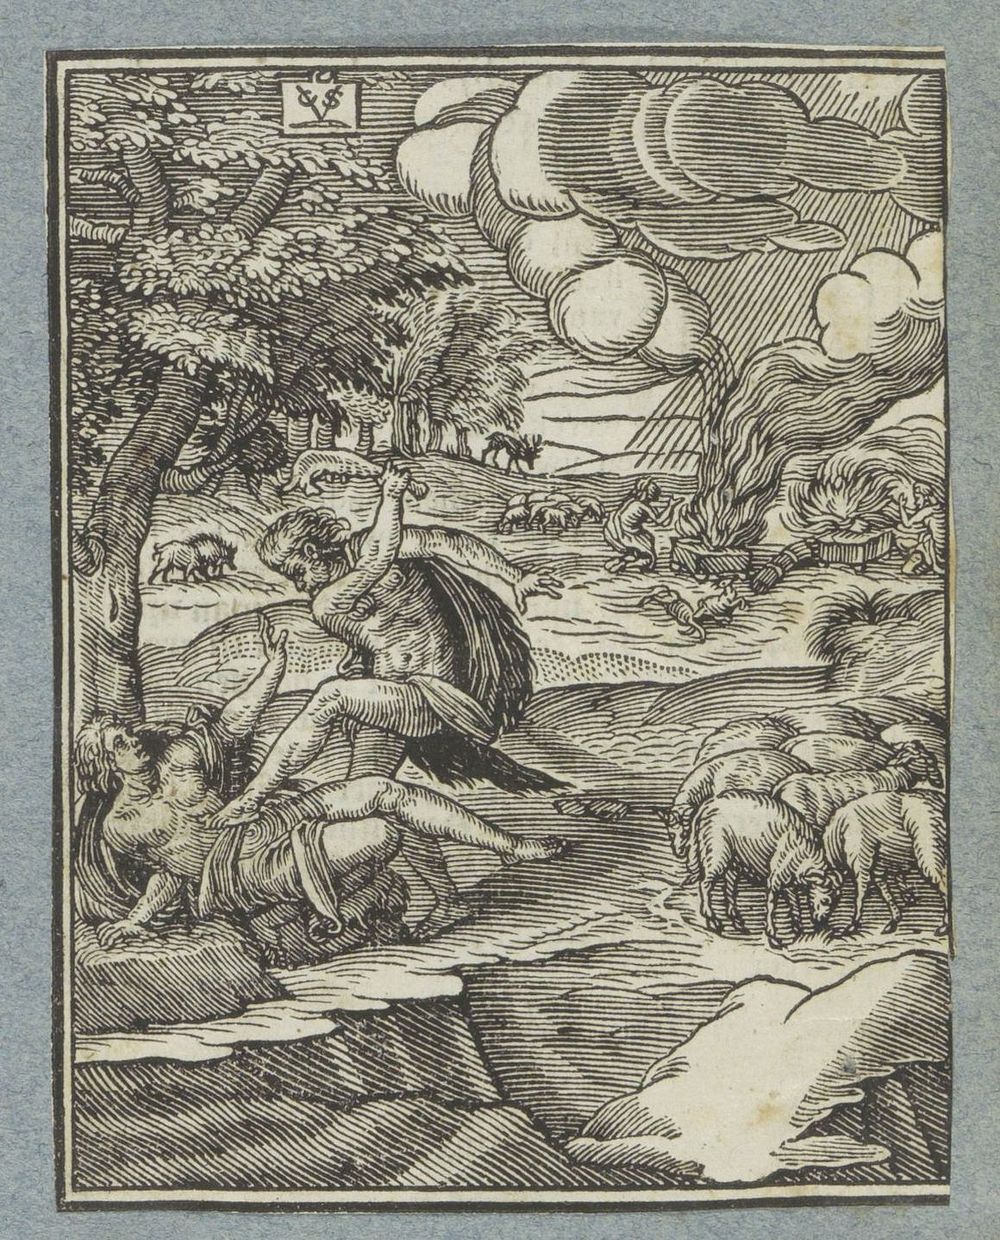 Kaïn doodt Abel (1645 - 1646) by Christoffel van Sichem II, Christoffel van Sichem III and Pieter Jacobsz Paets